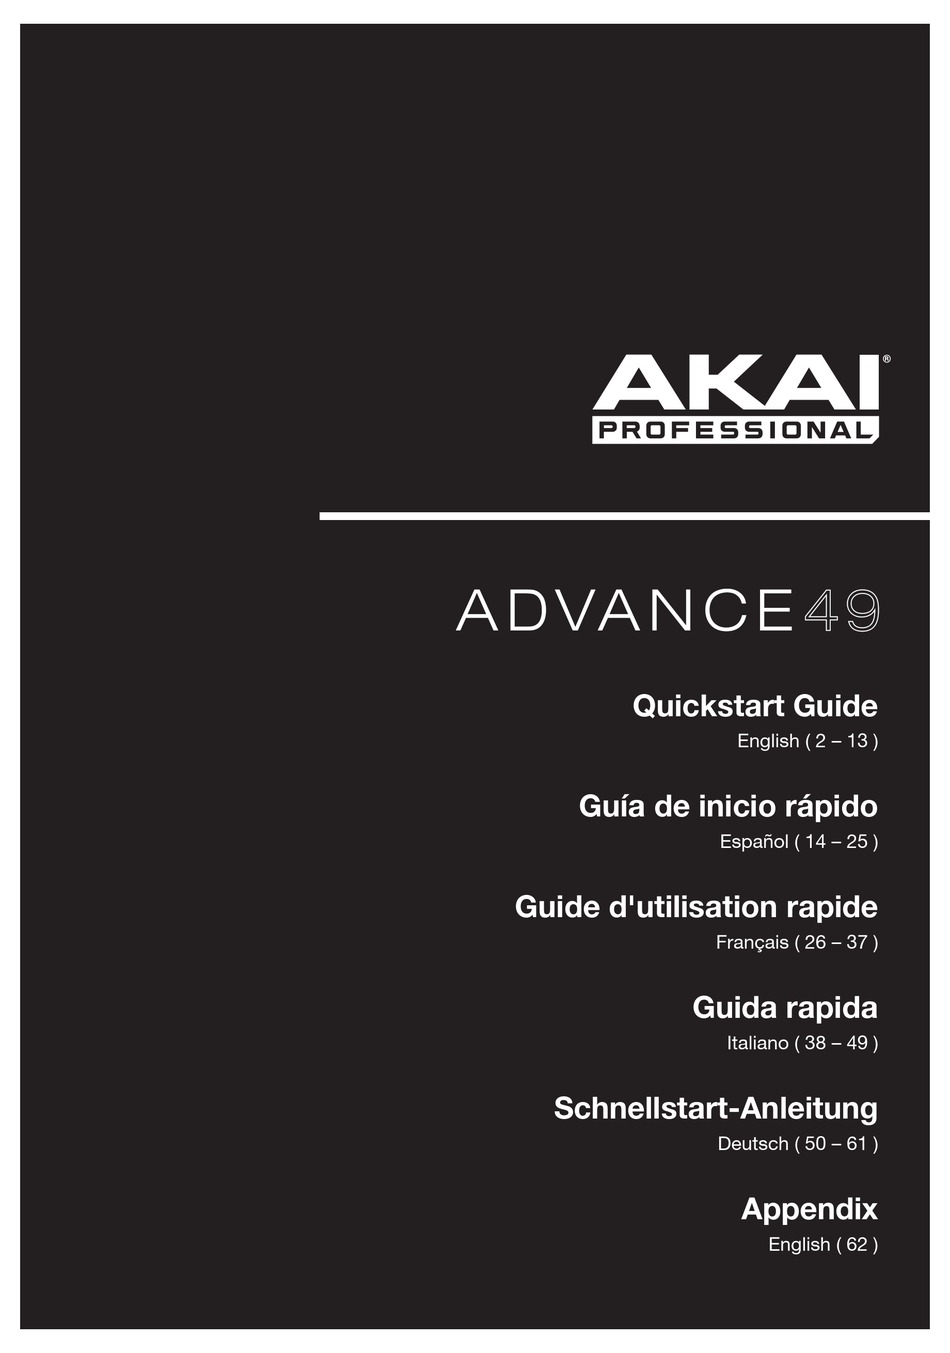 AKAI ADVANCE 49 QUICK START MANUAL Pdf Download | ManualsLib